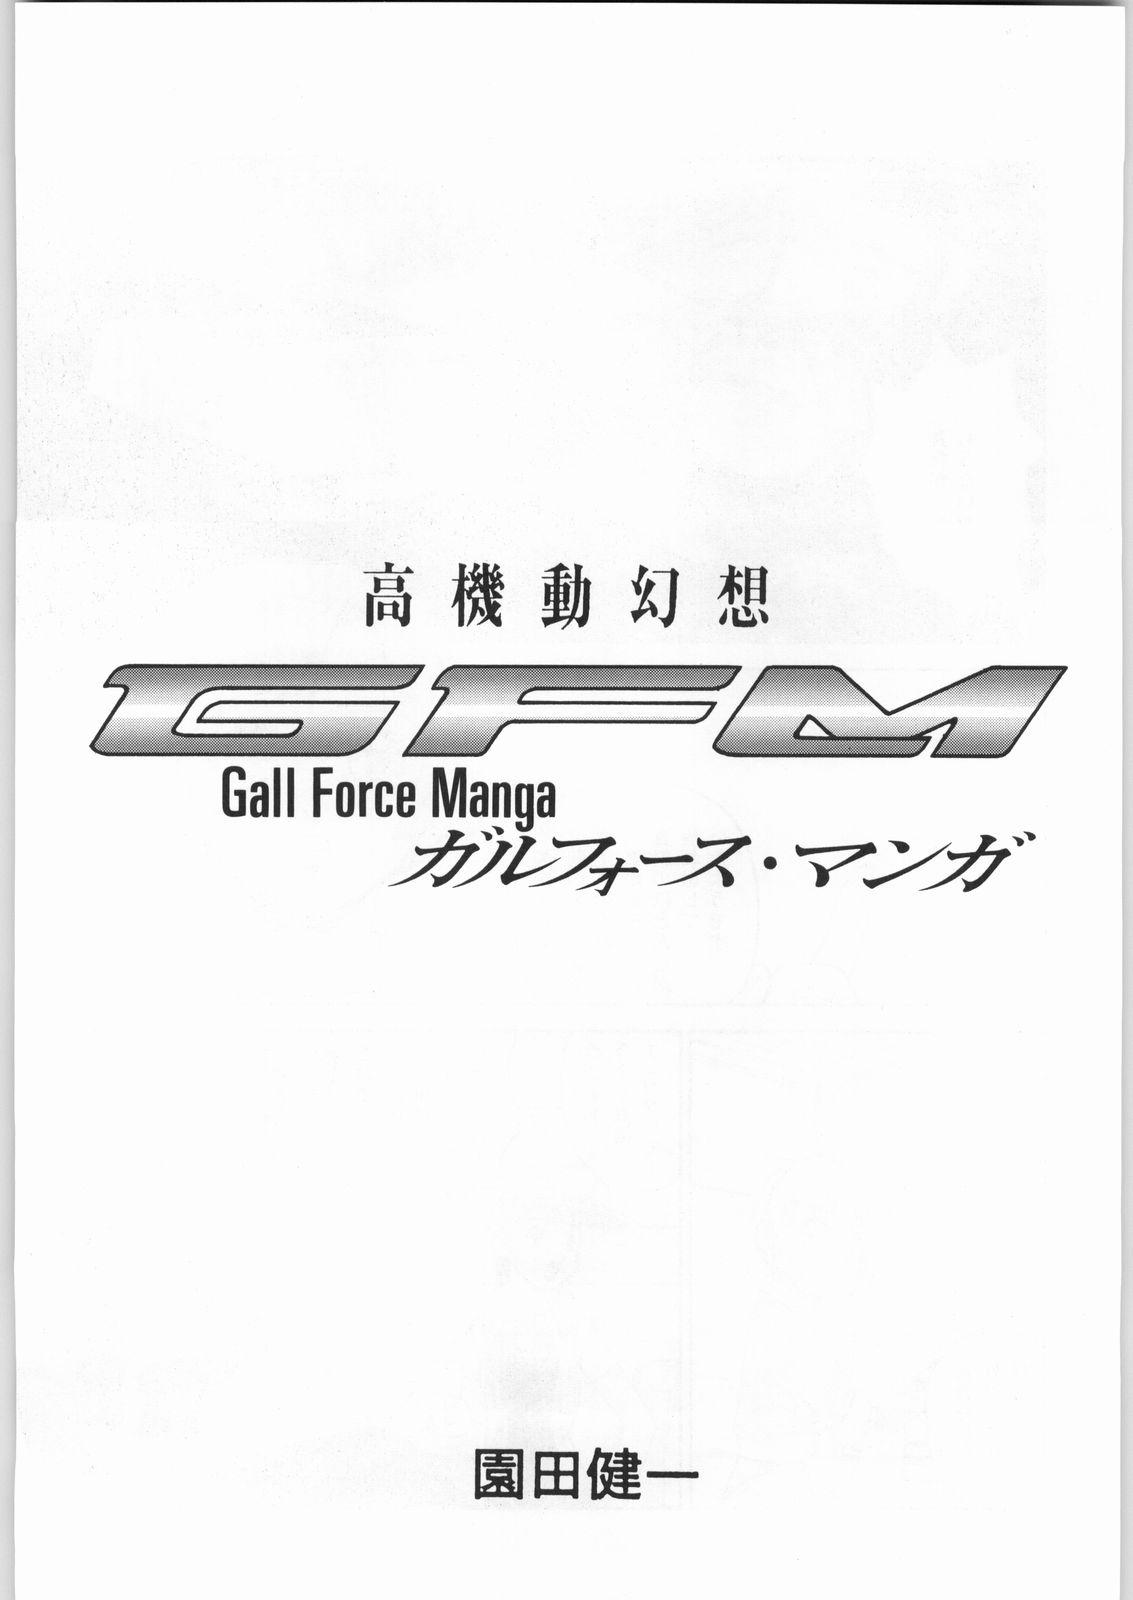 Longhair Chousen Ame Ver.19 - Galaxy angel Gundam Casting - Page 4